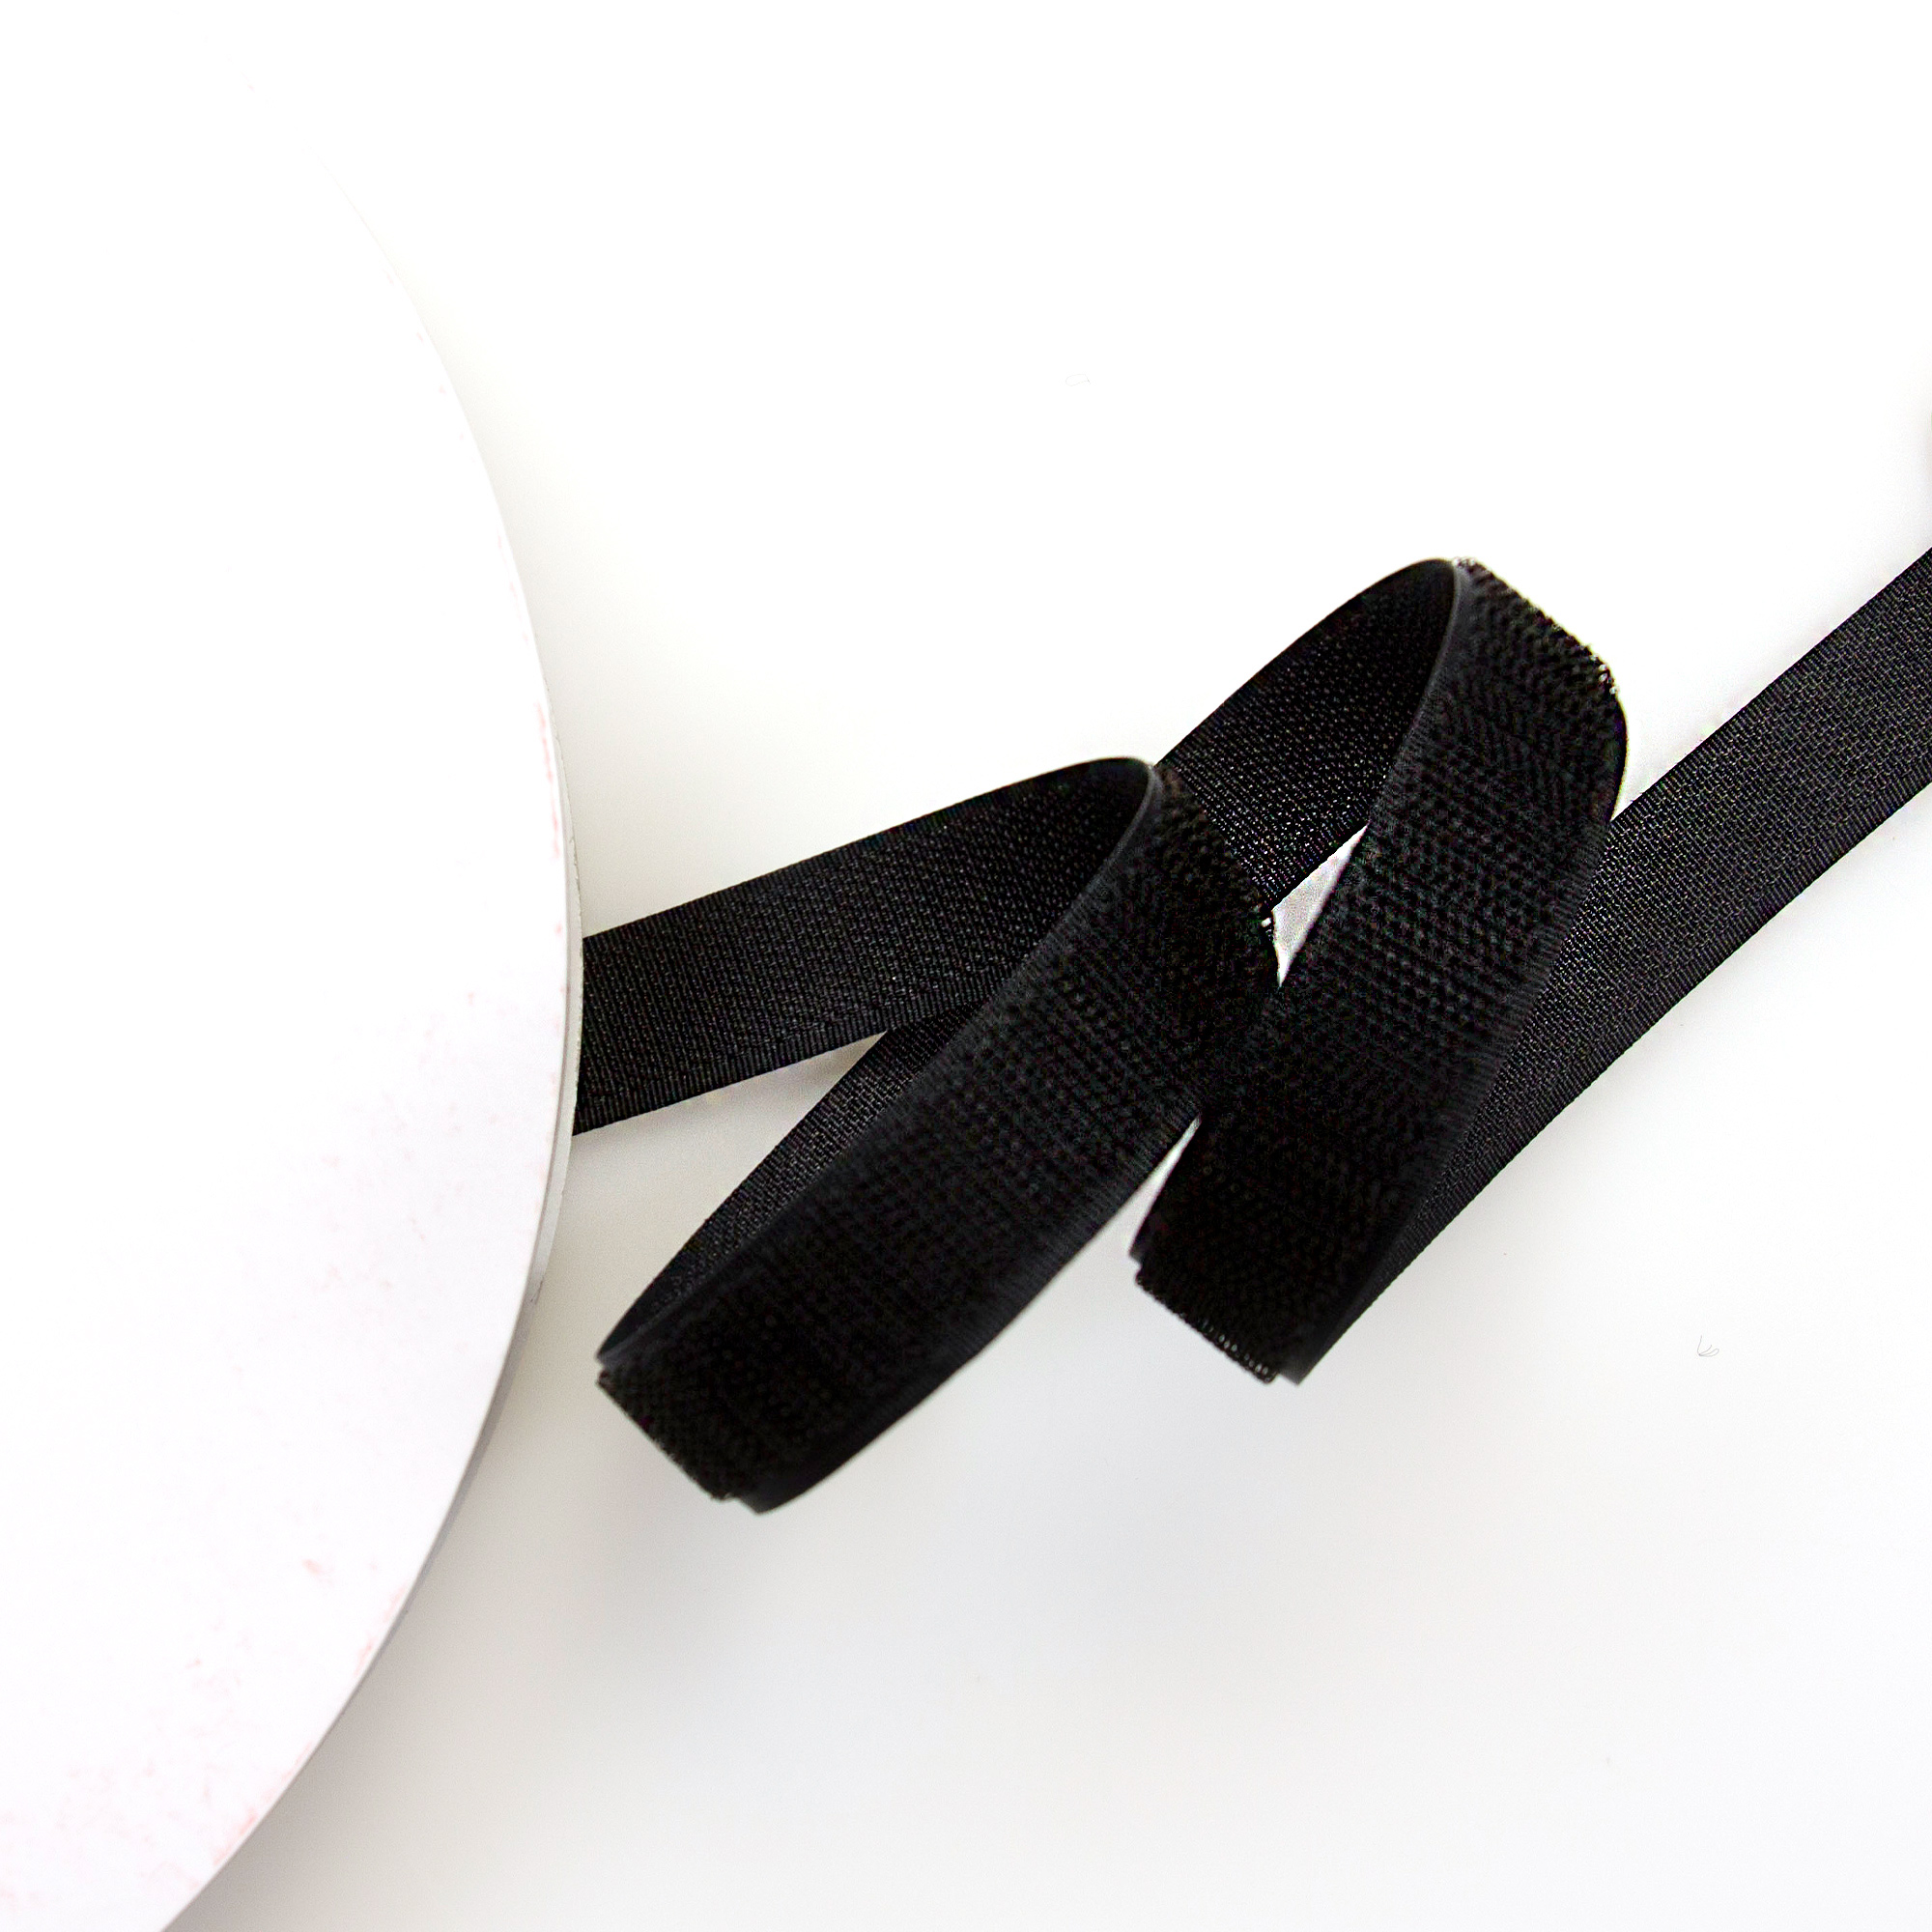 20mm Endlos-Klettverschluss selbstklebend Hakenband schwarz